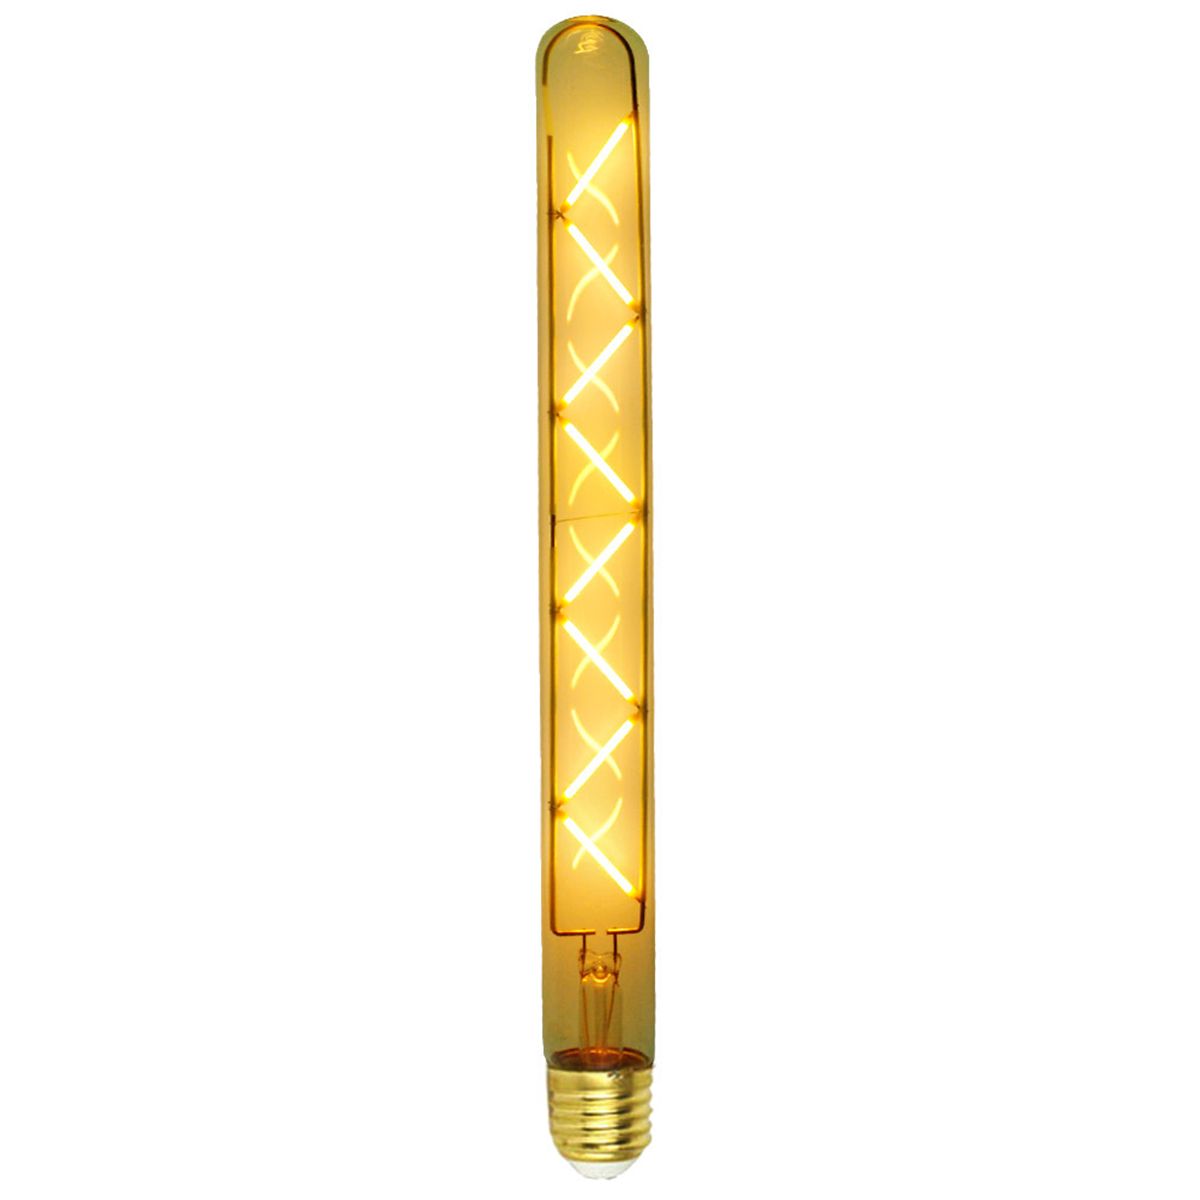 E27-Incandescent-Light-Bulb-4W-Vintage-Industrial-Retro-Edison-Home-Decor-Lamp-AC220-240V-1639011